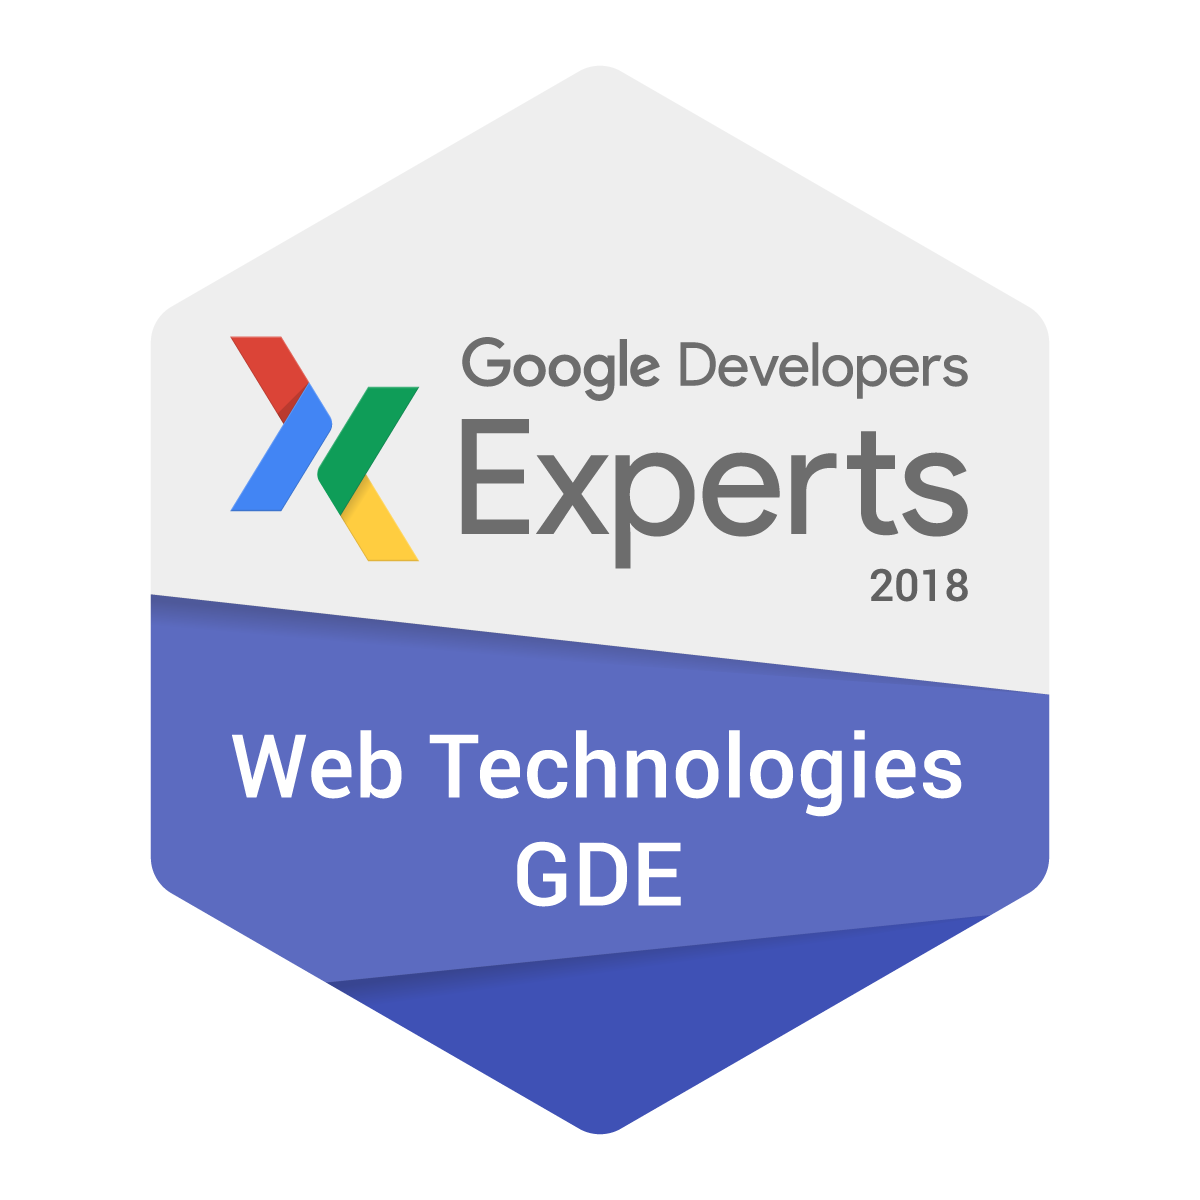 Web Technologies GDE